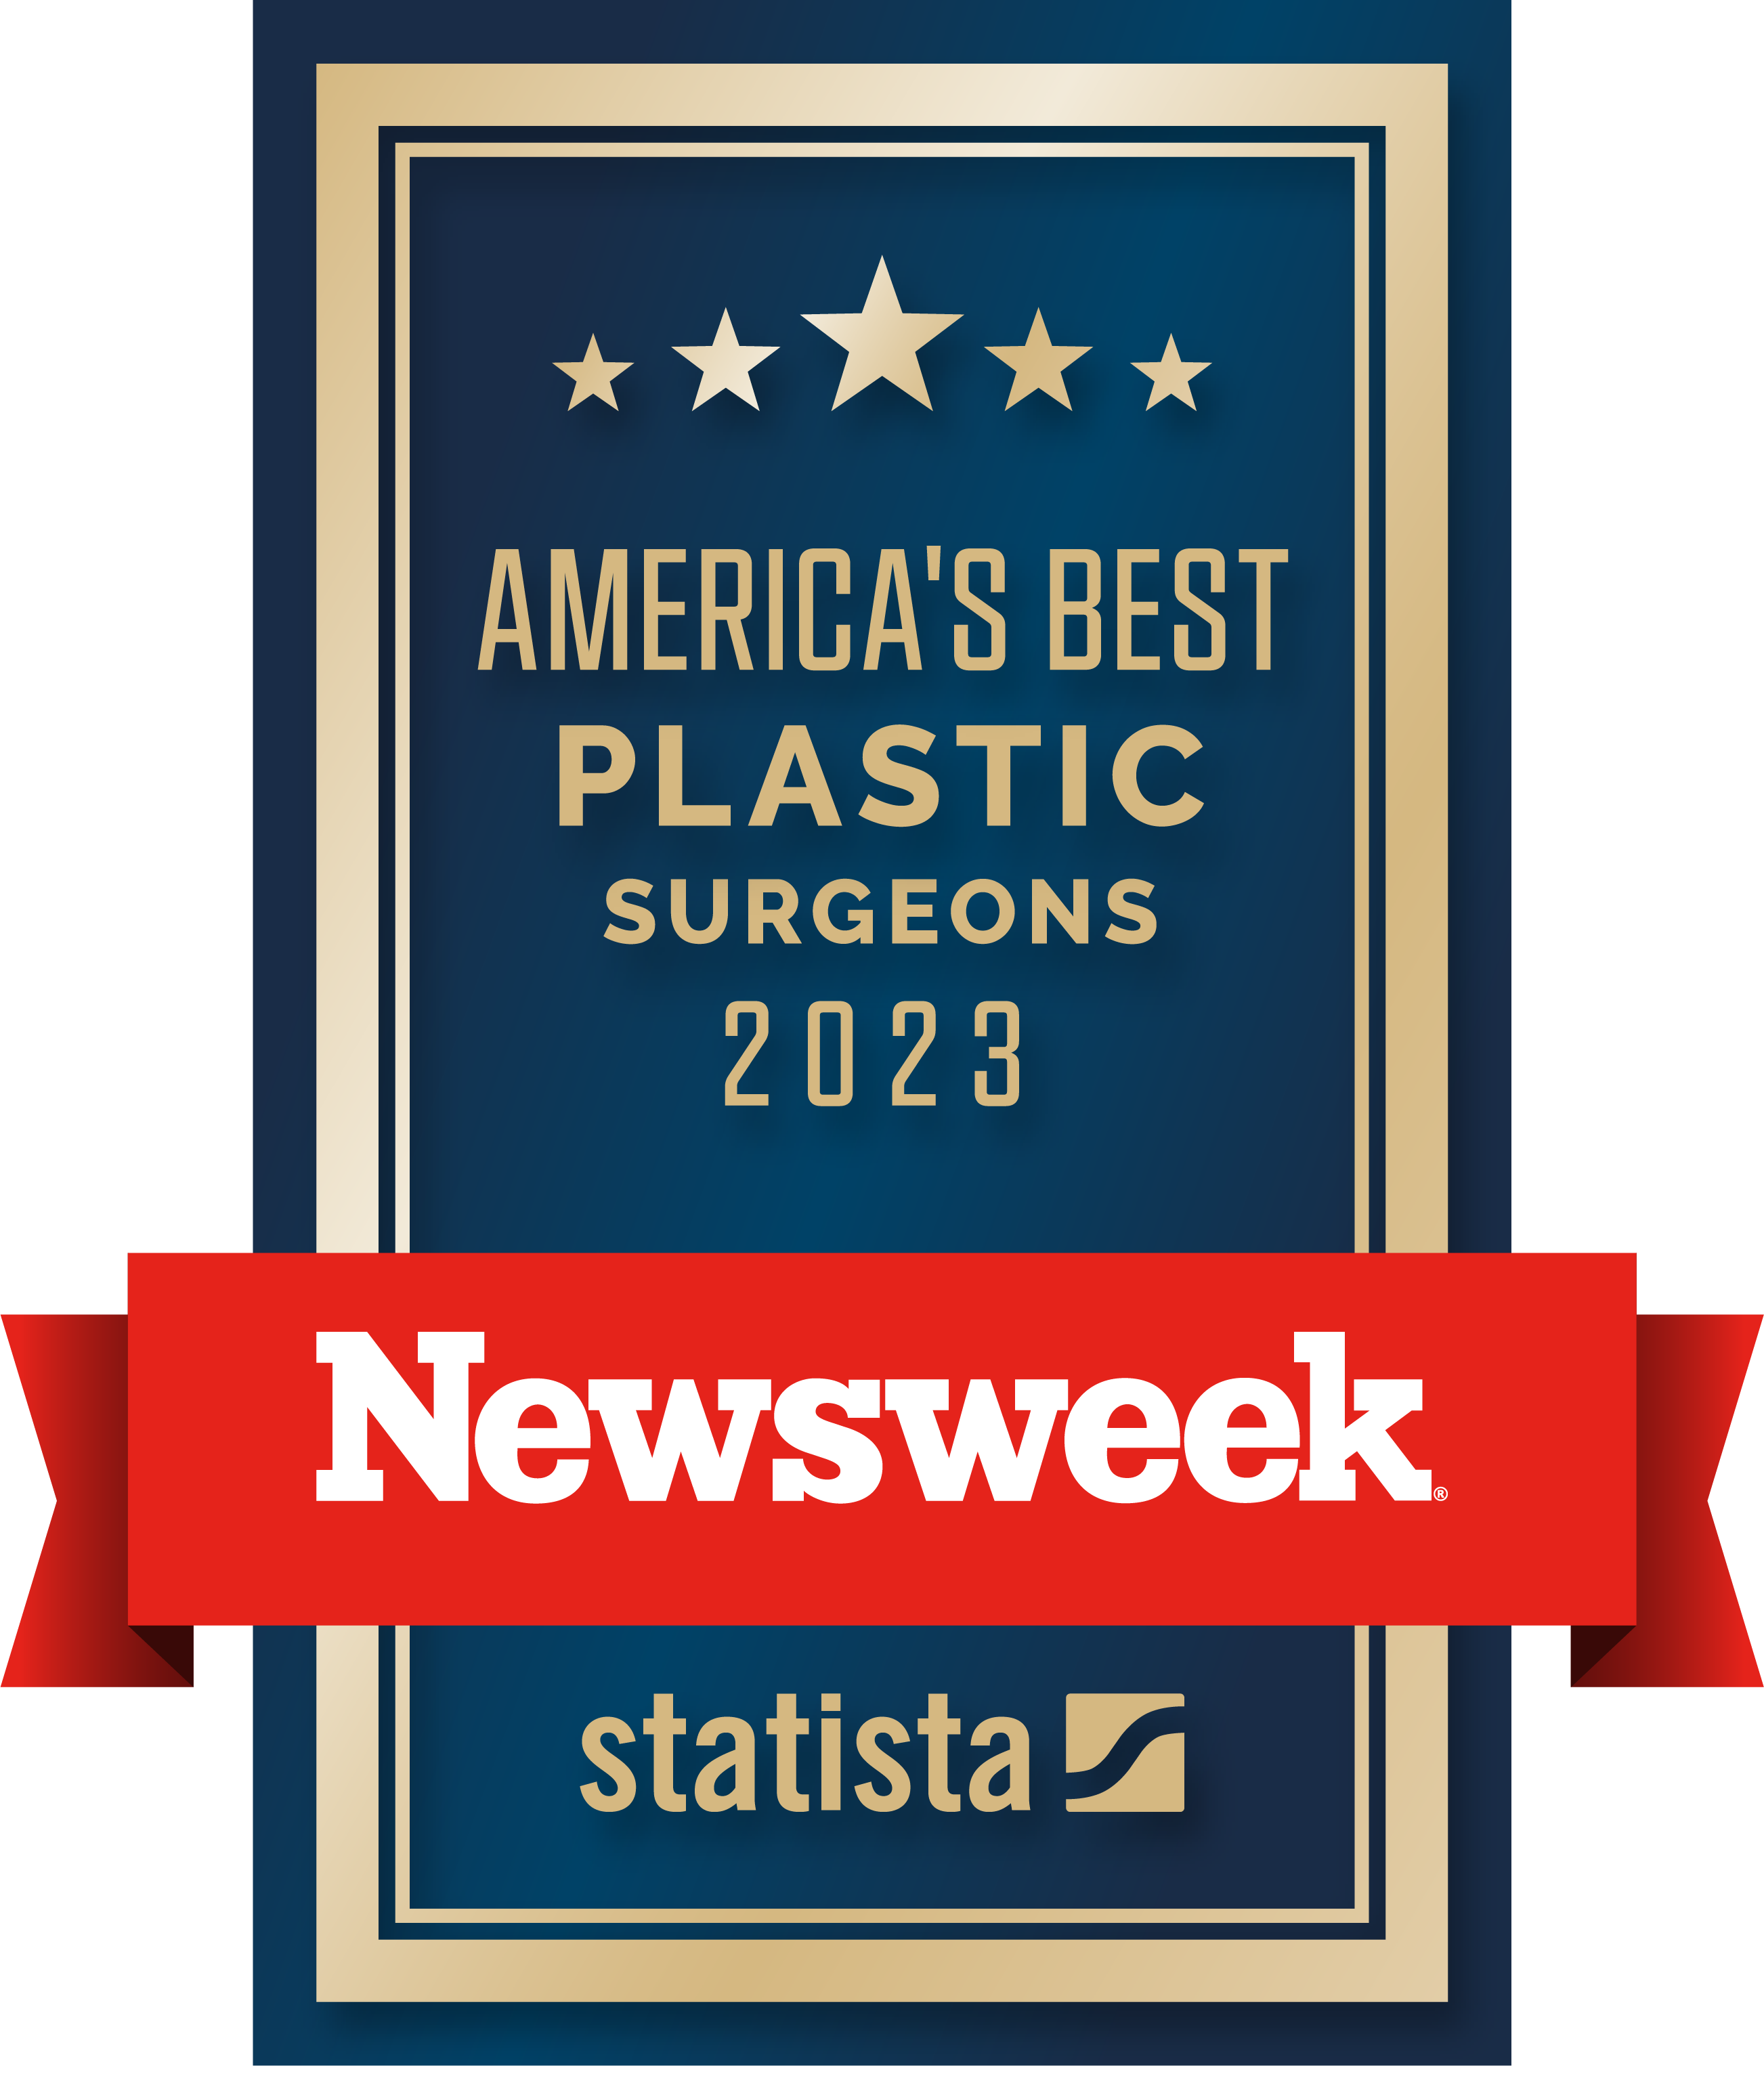 Americas best plastic surgeons award 2023